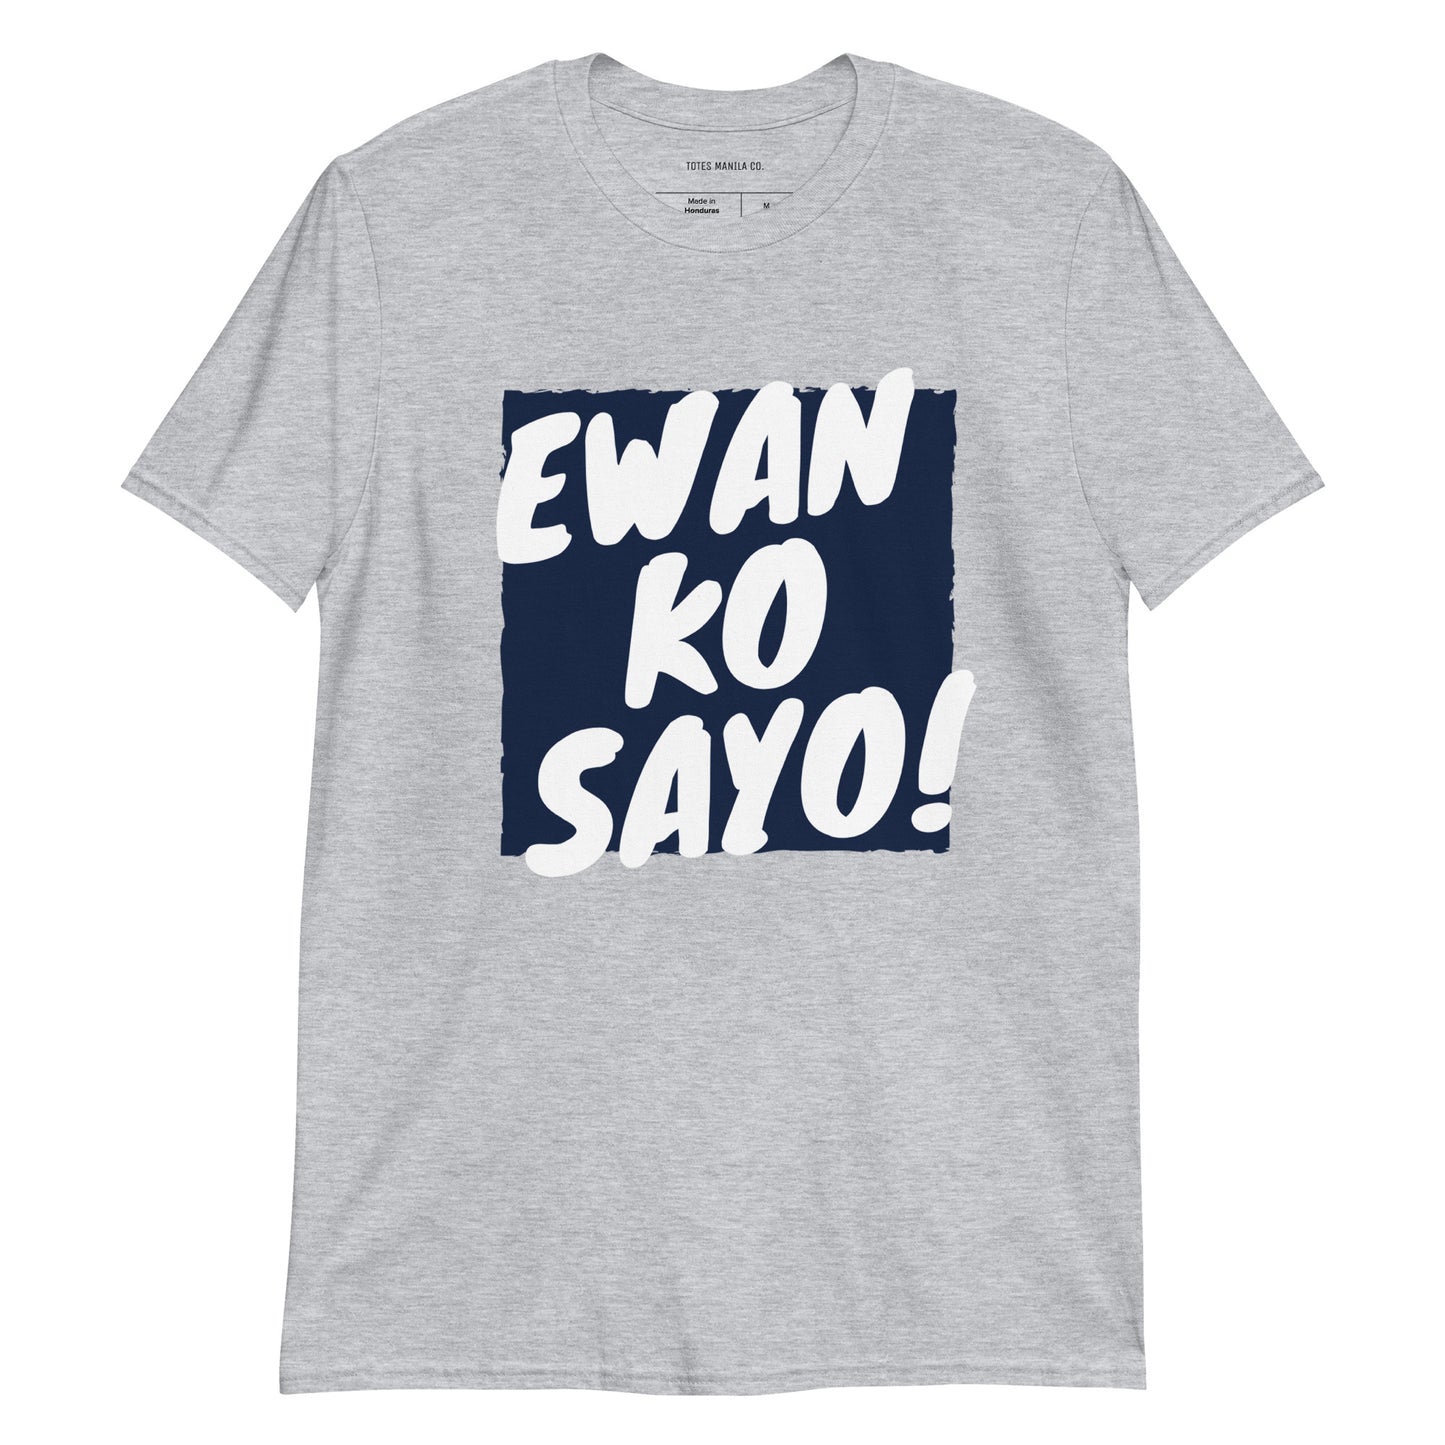 Filipino Shirt Ewan Ko Sayo! Funny Merch in color variant Gray